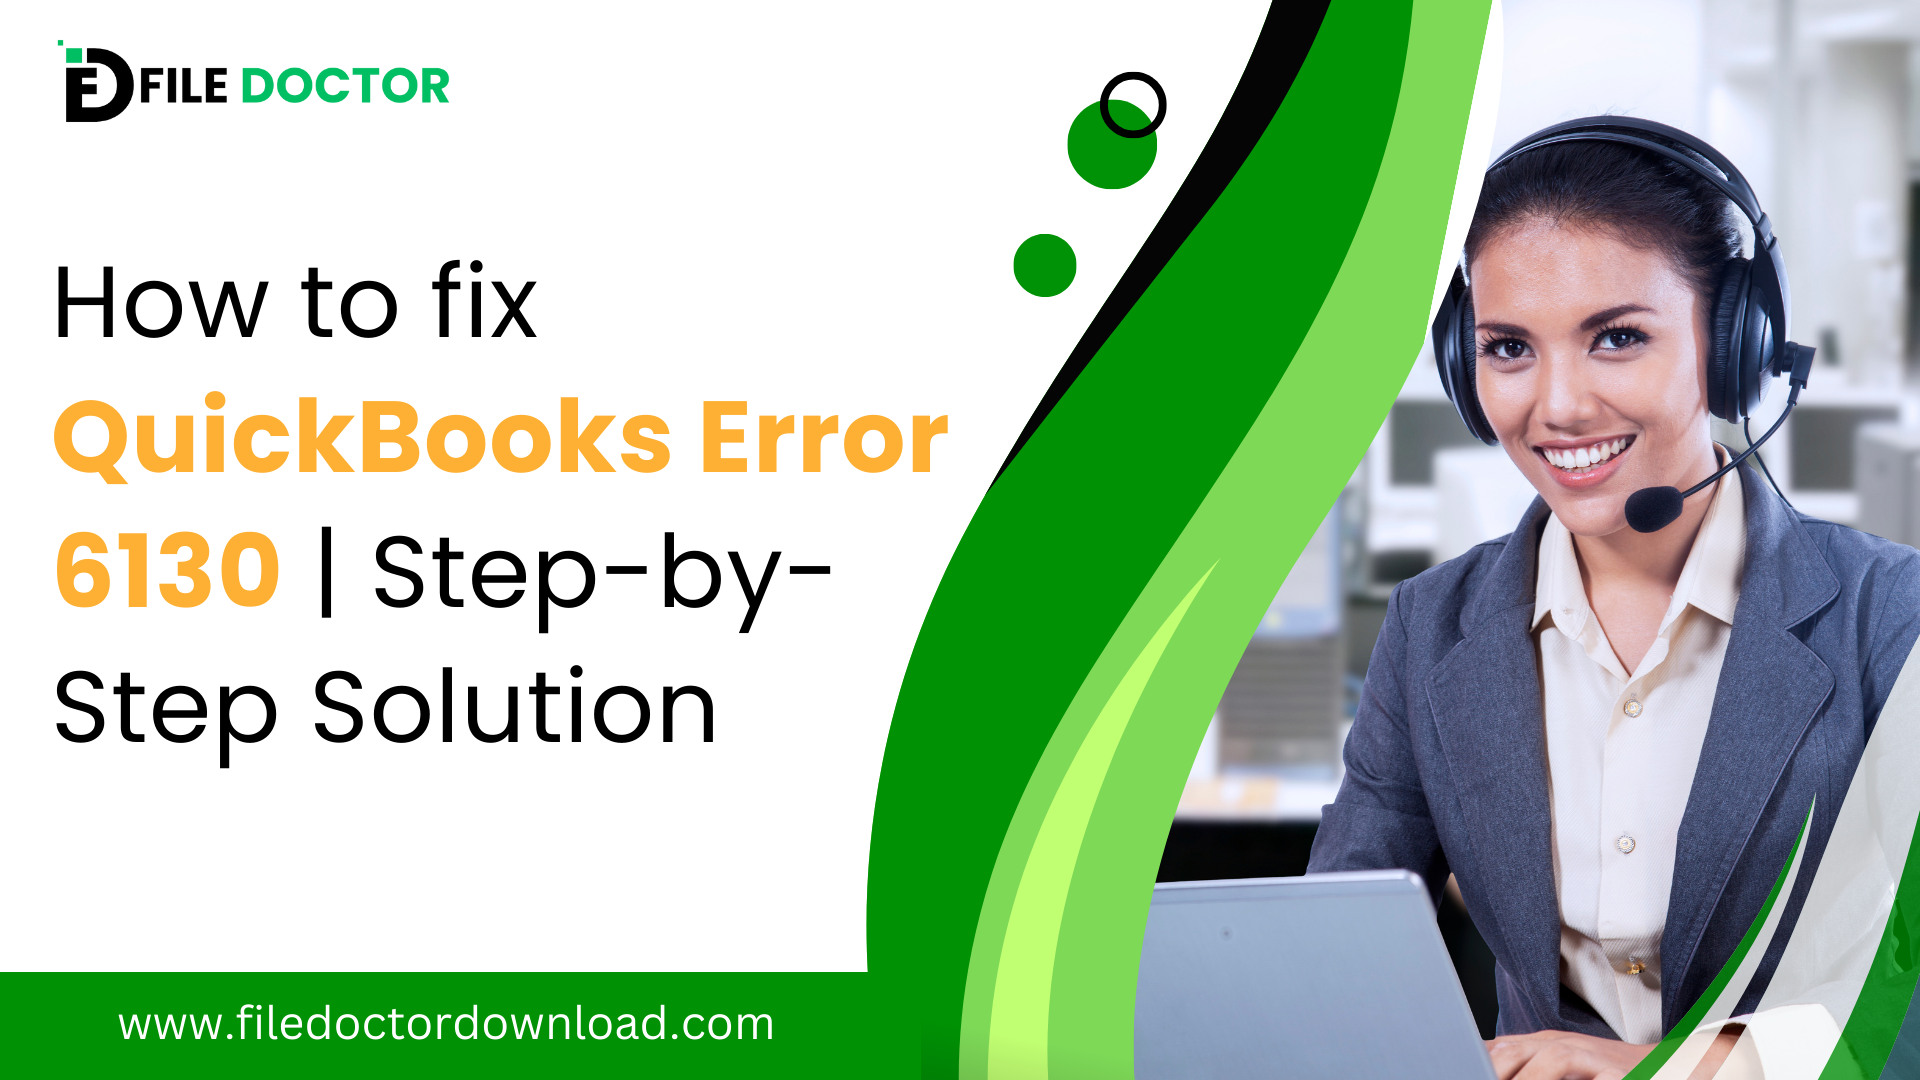 How to fix QuickBooks Error 6130